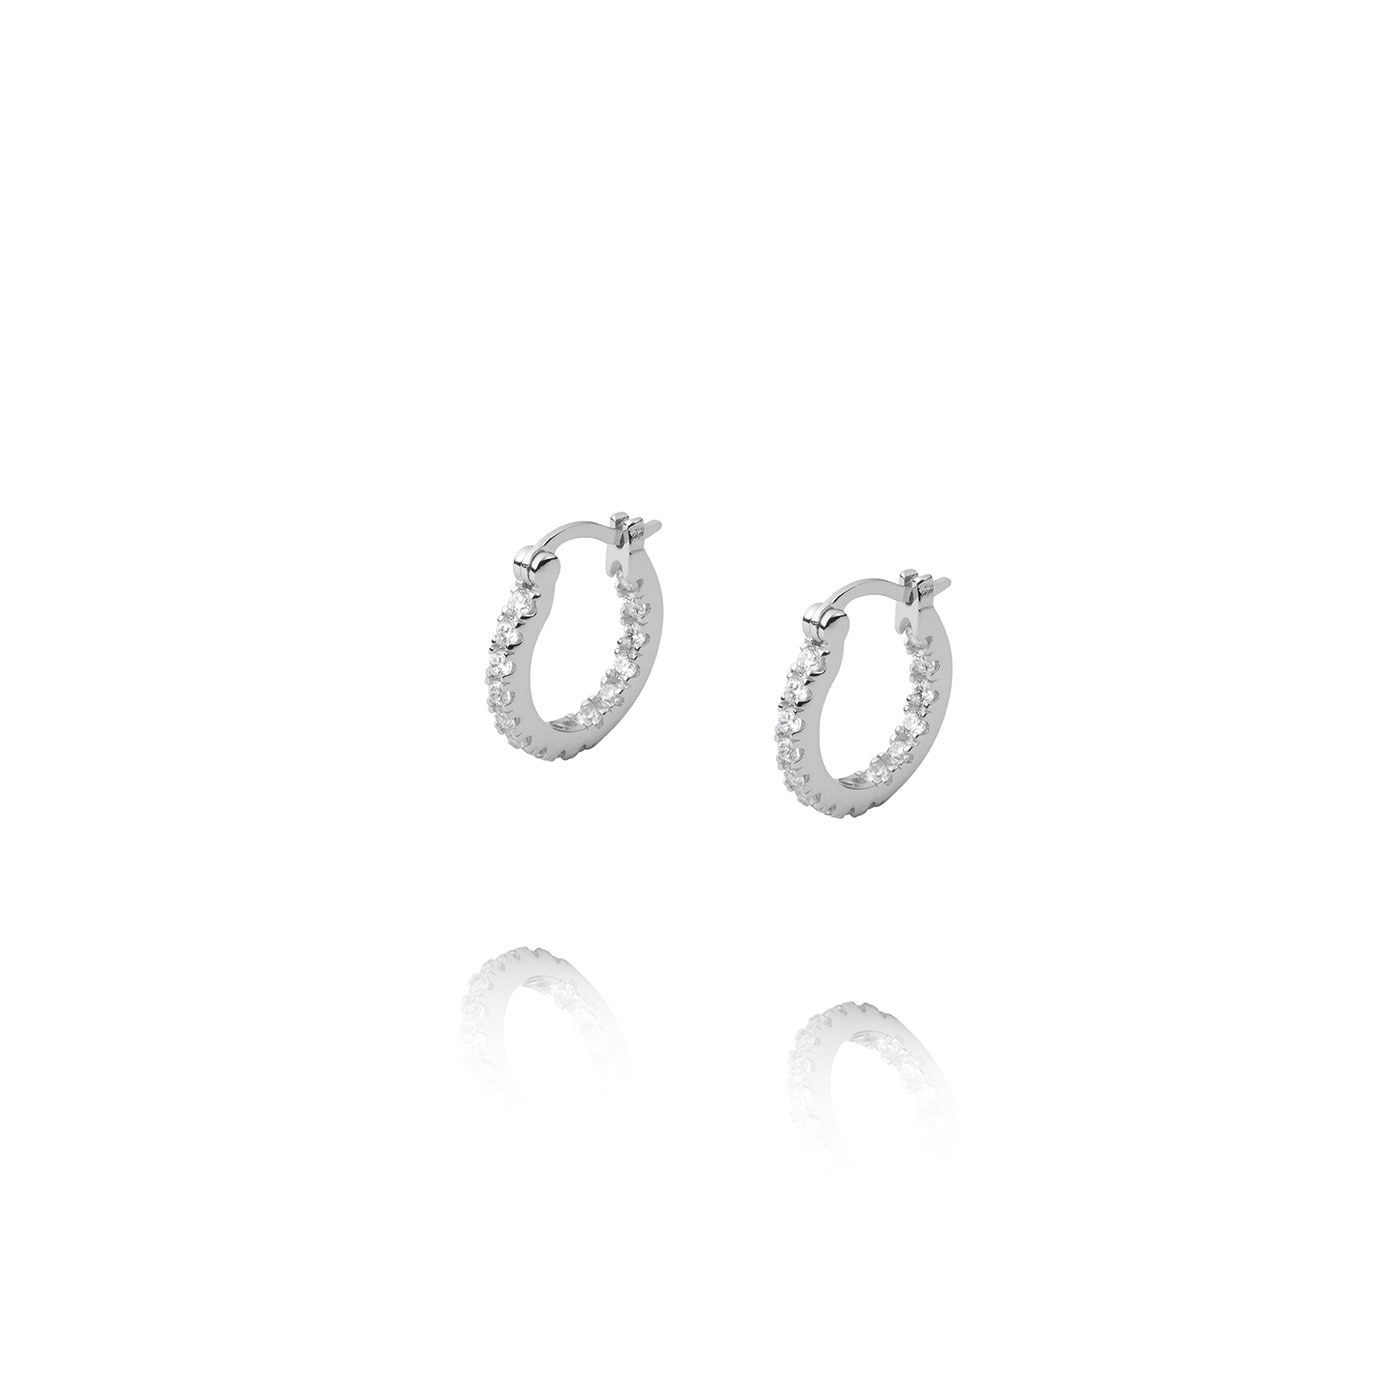 Lunar Earrings Silver/White Small